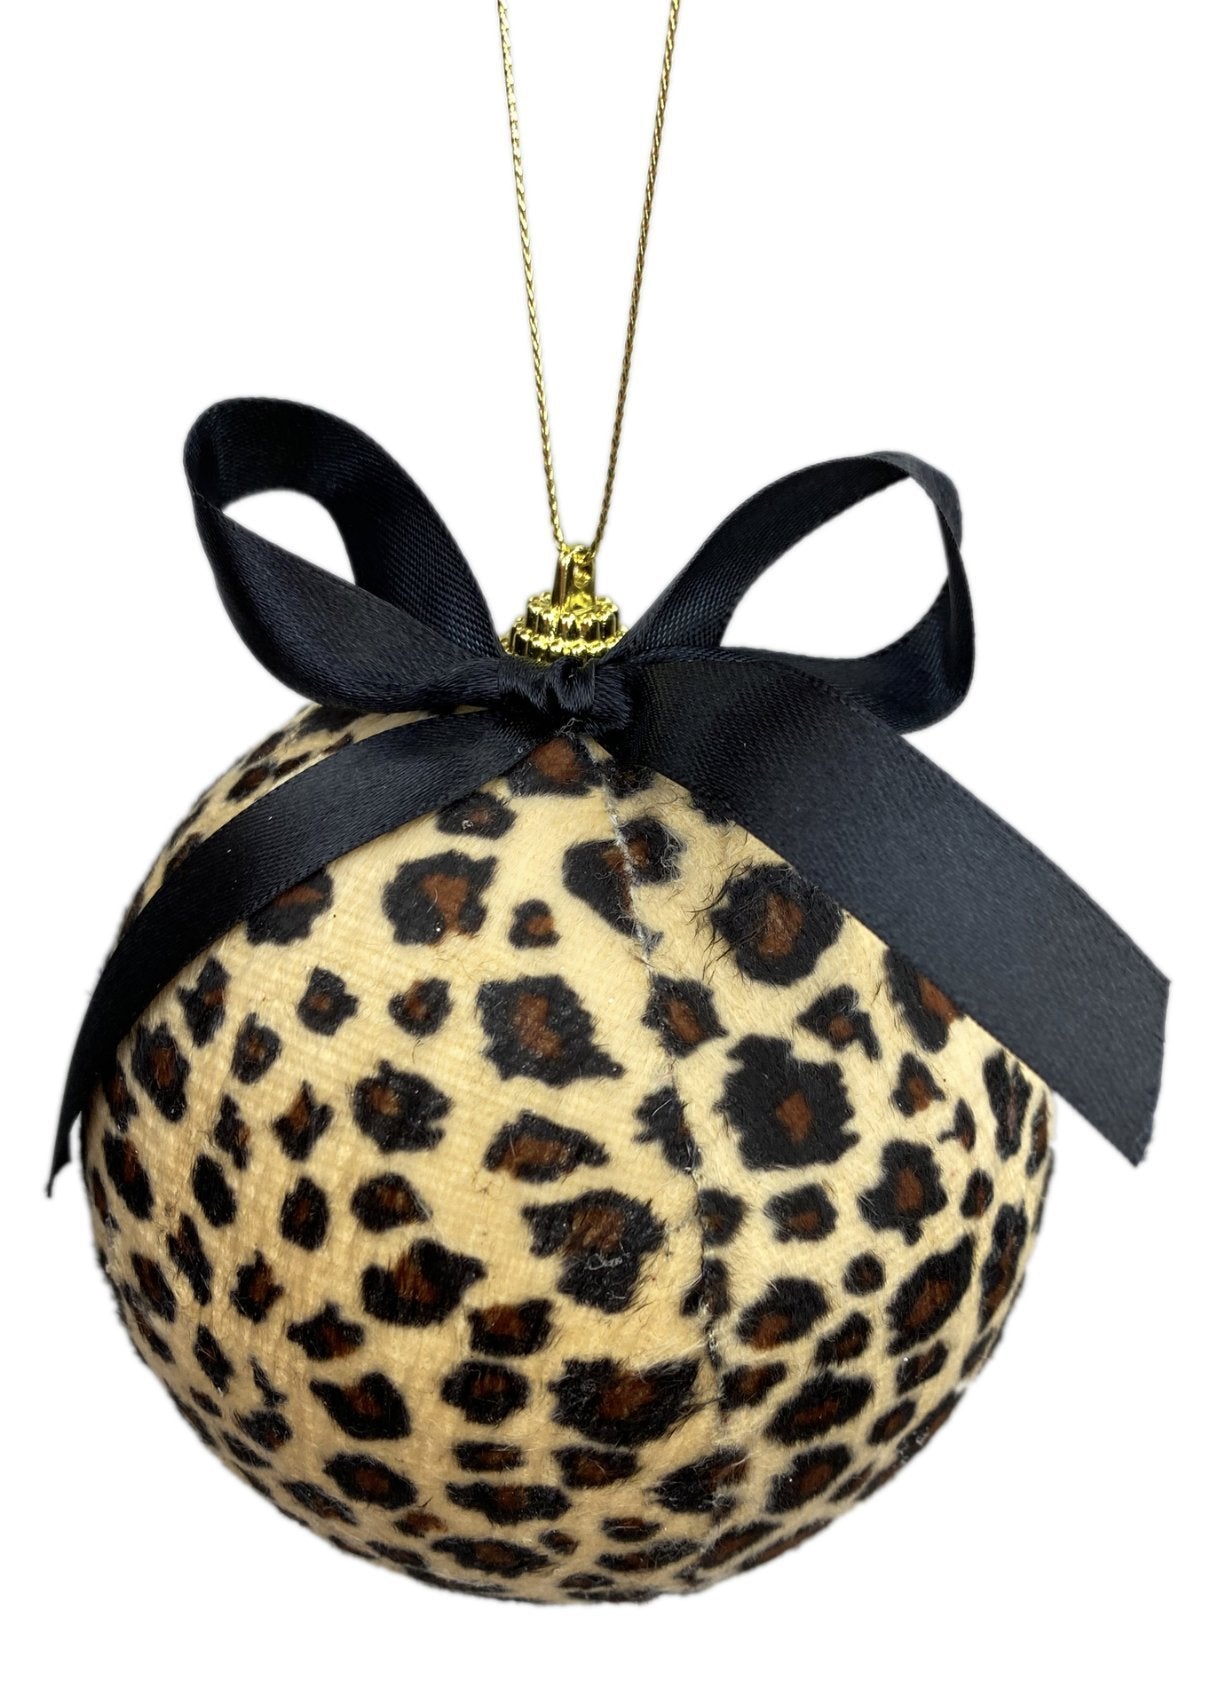 Cheetah ball ornaments - 4” - Greenery Market